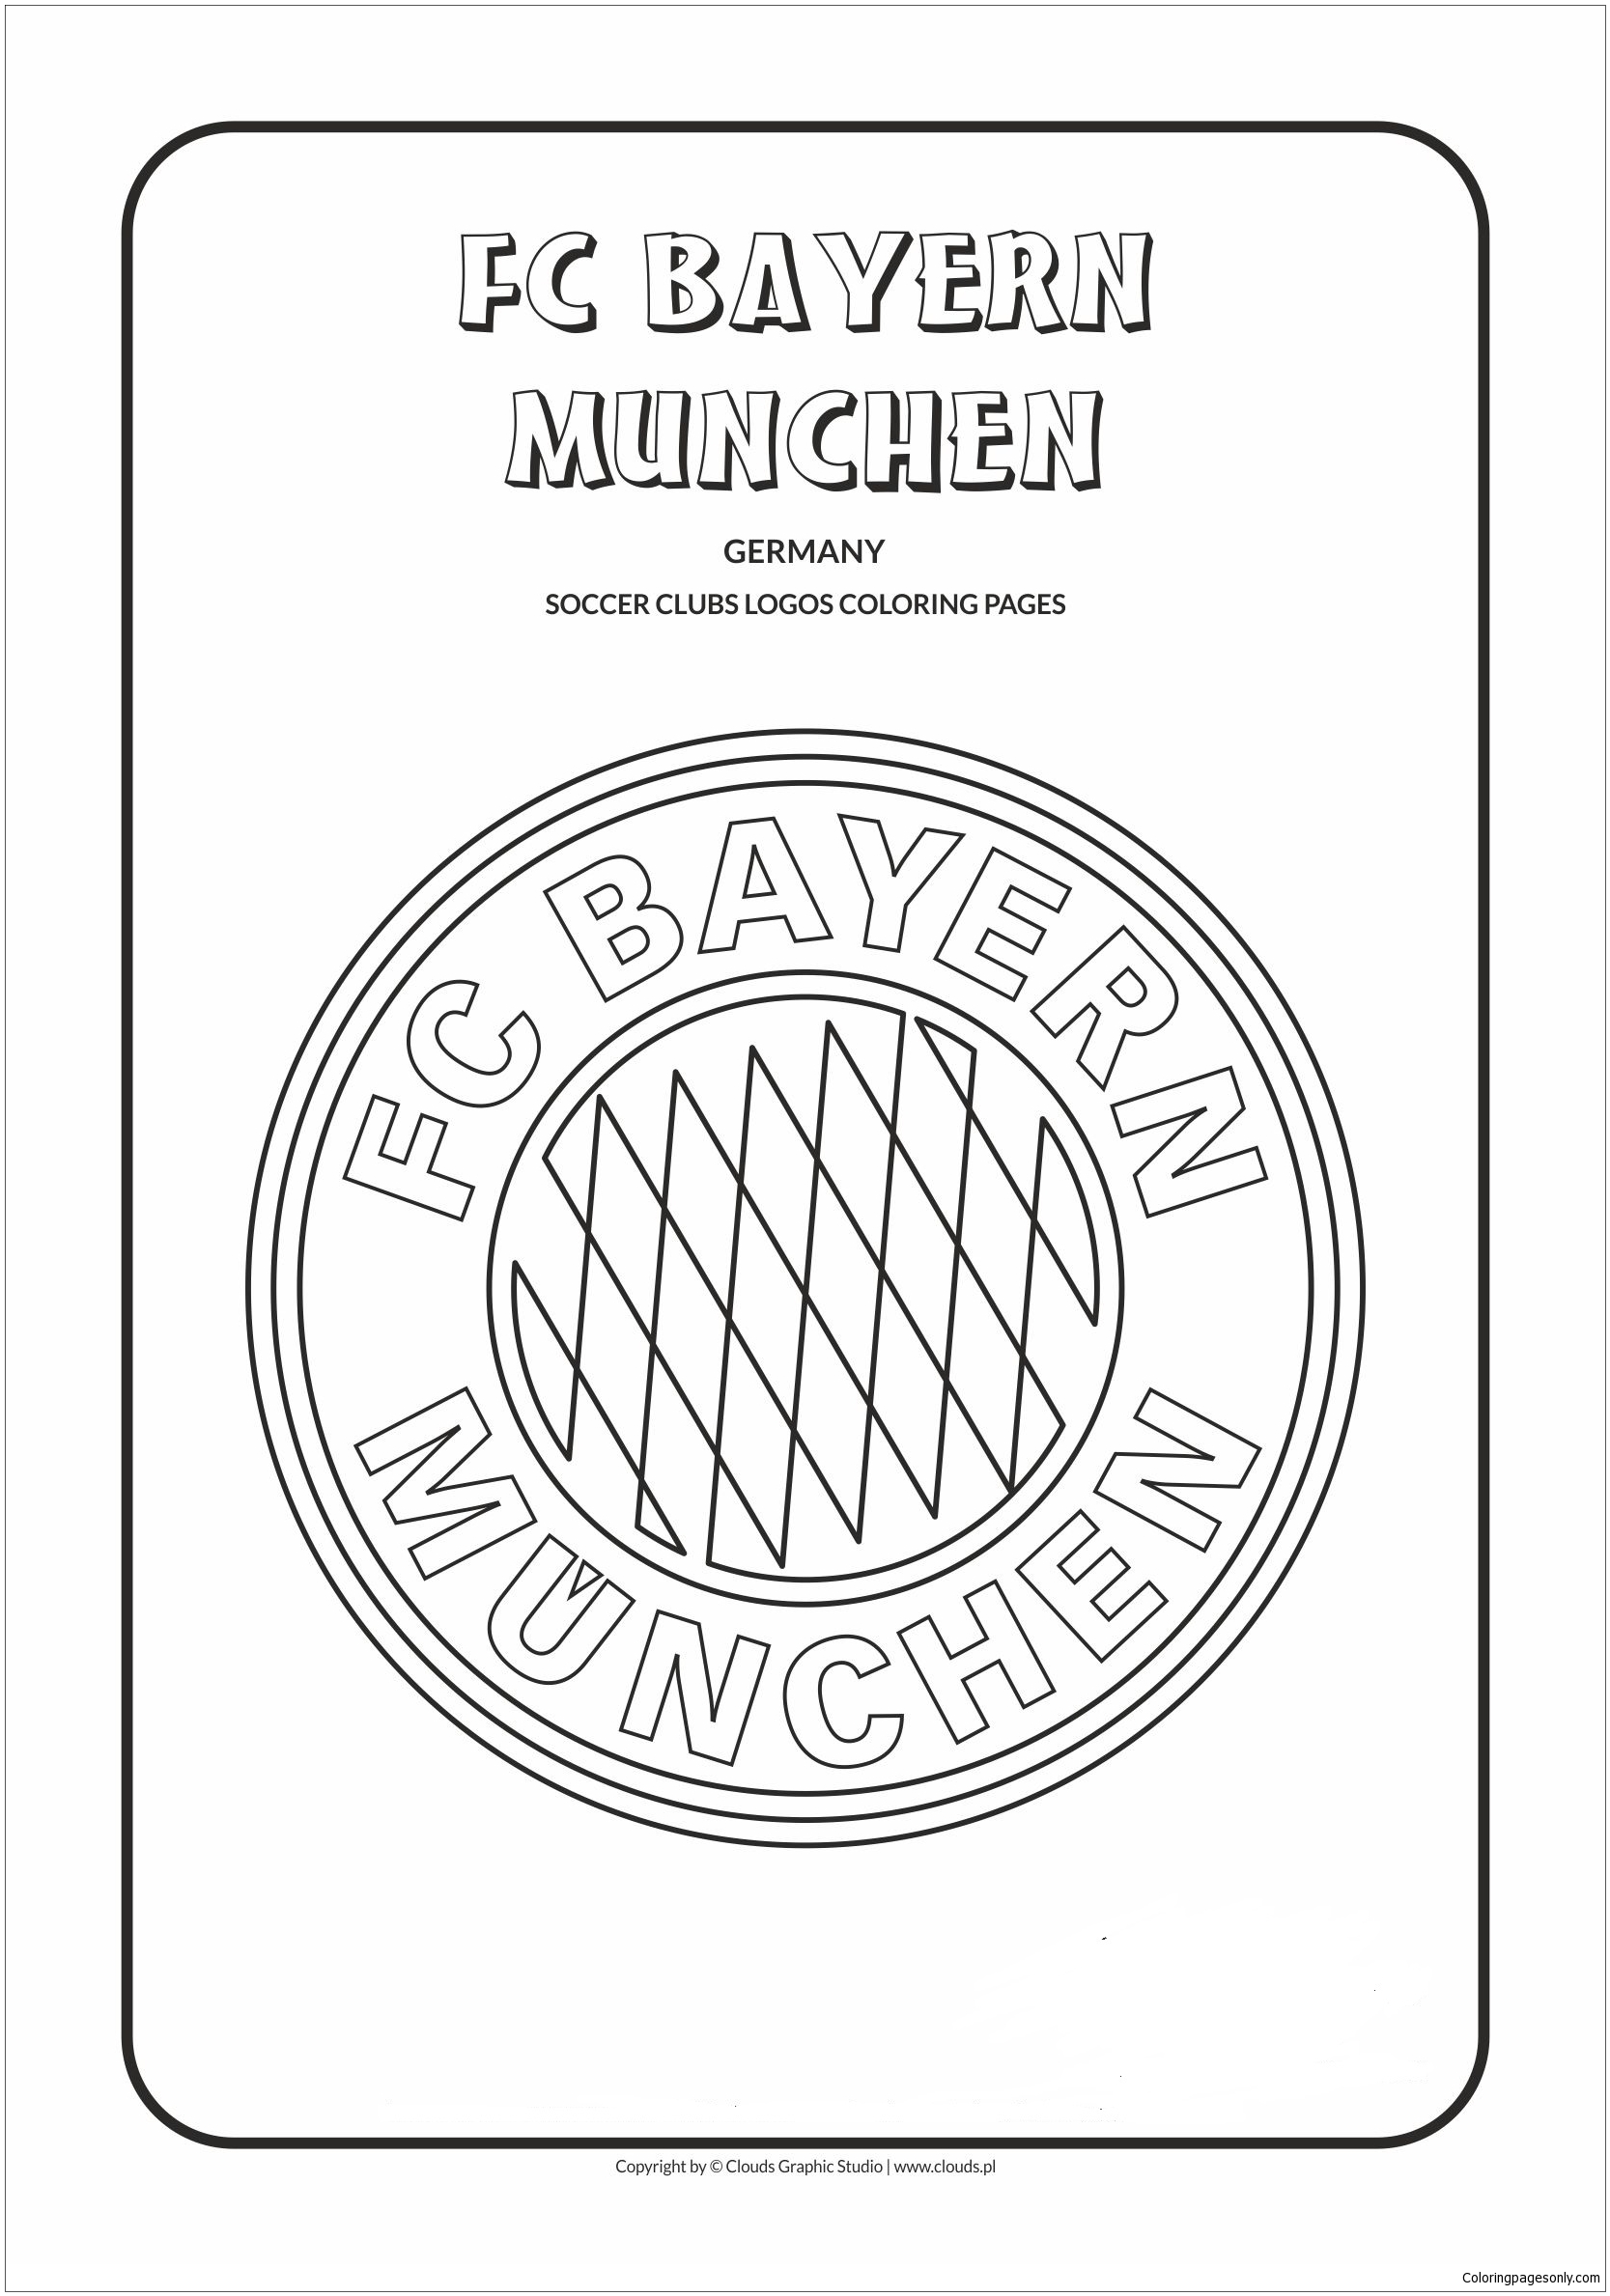 Логотипы футбольного клуба «Бавария Мюнхен» из немецкой команды Бундеслиги